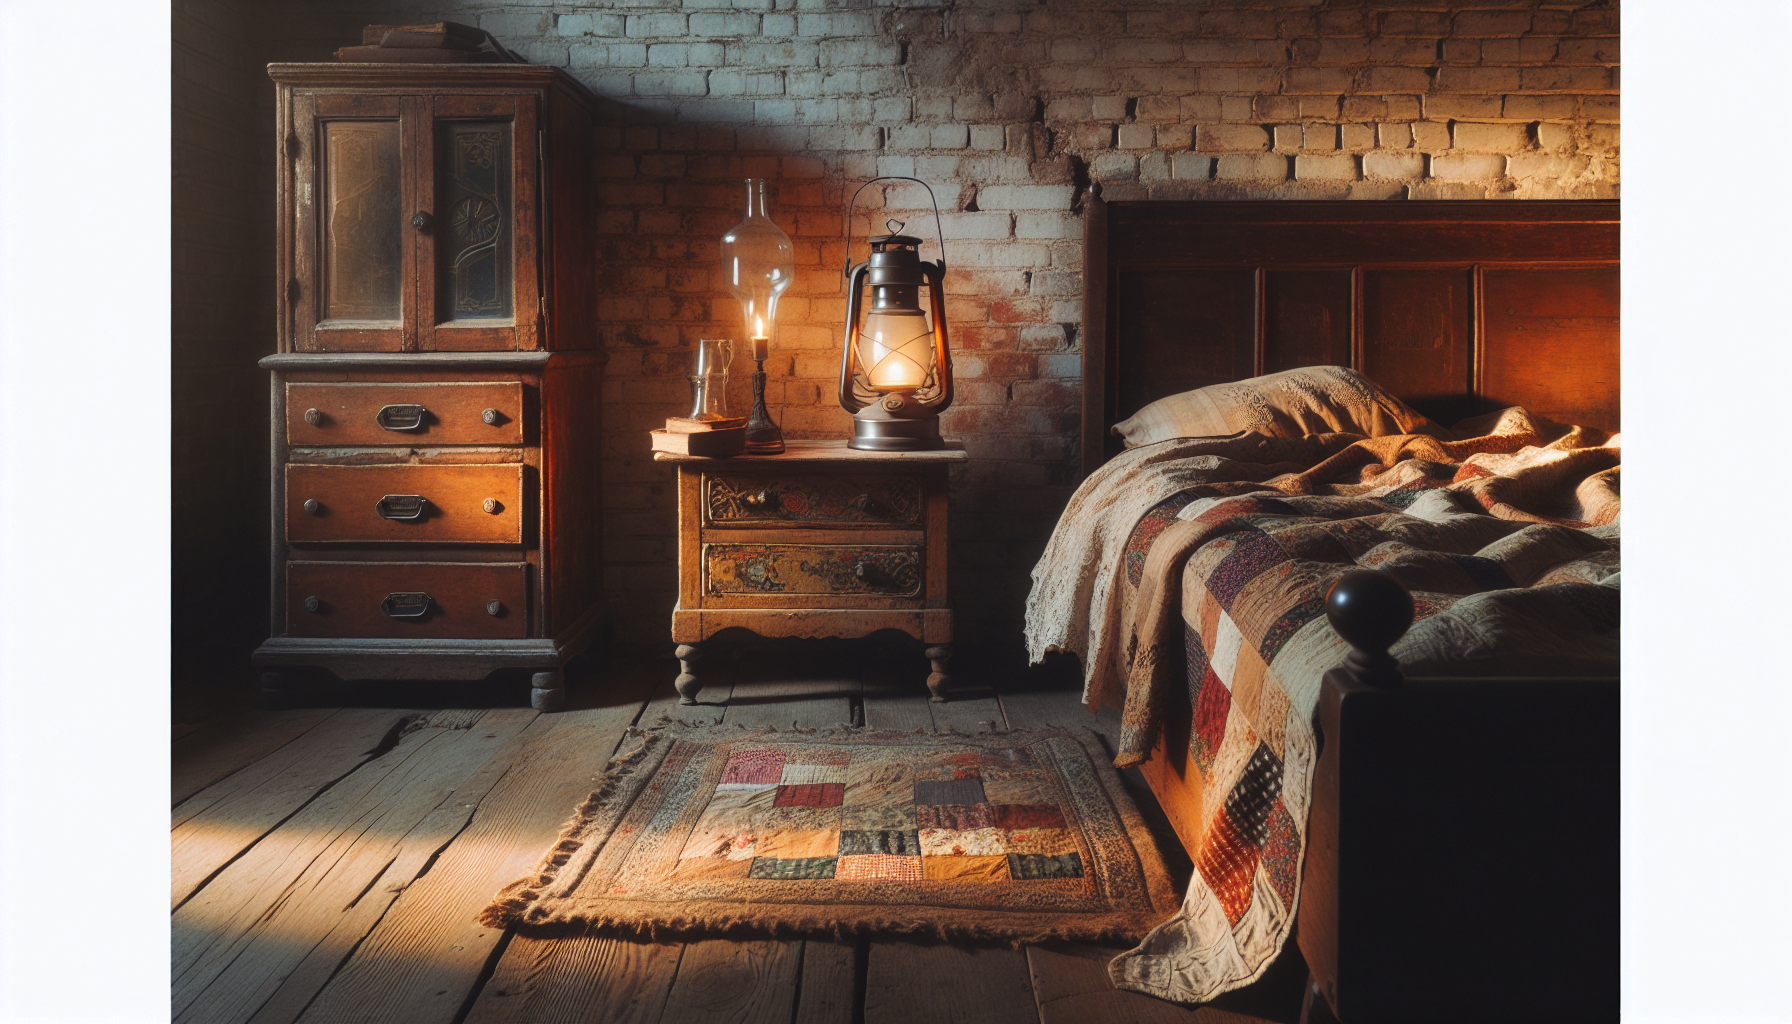 Rustic bedroom furniture